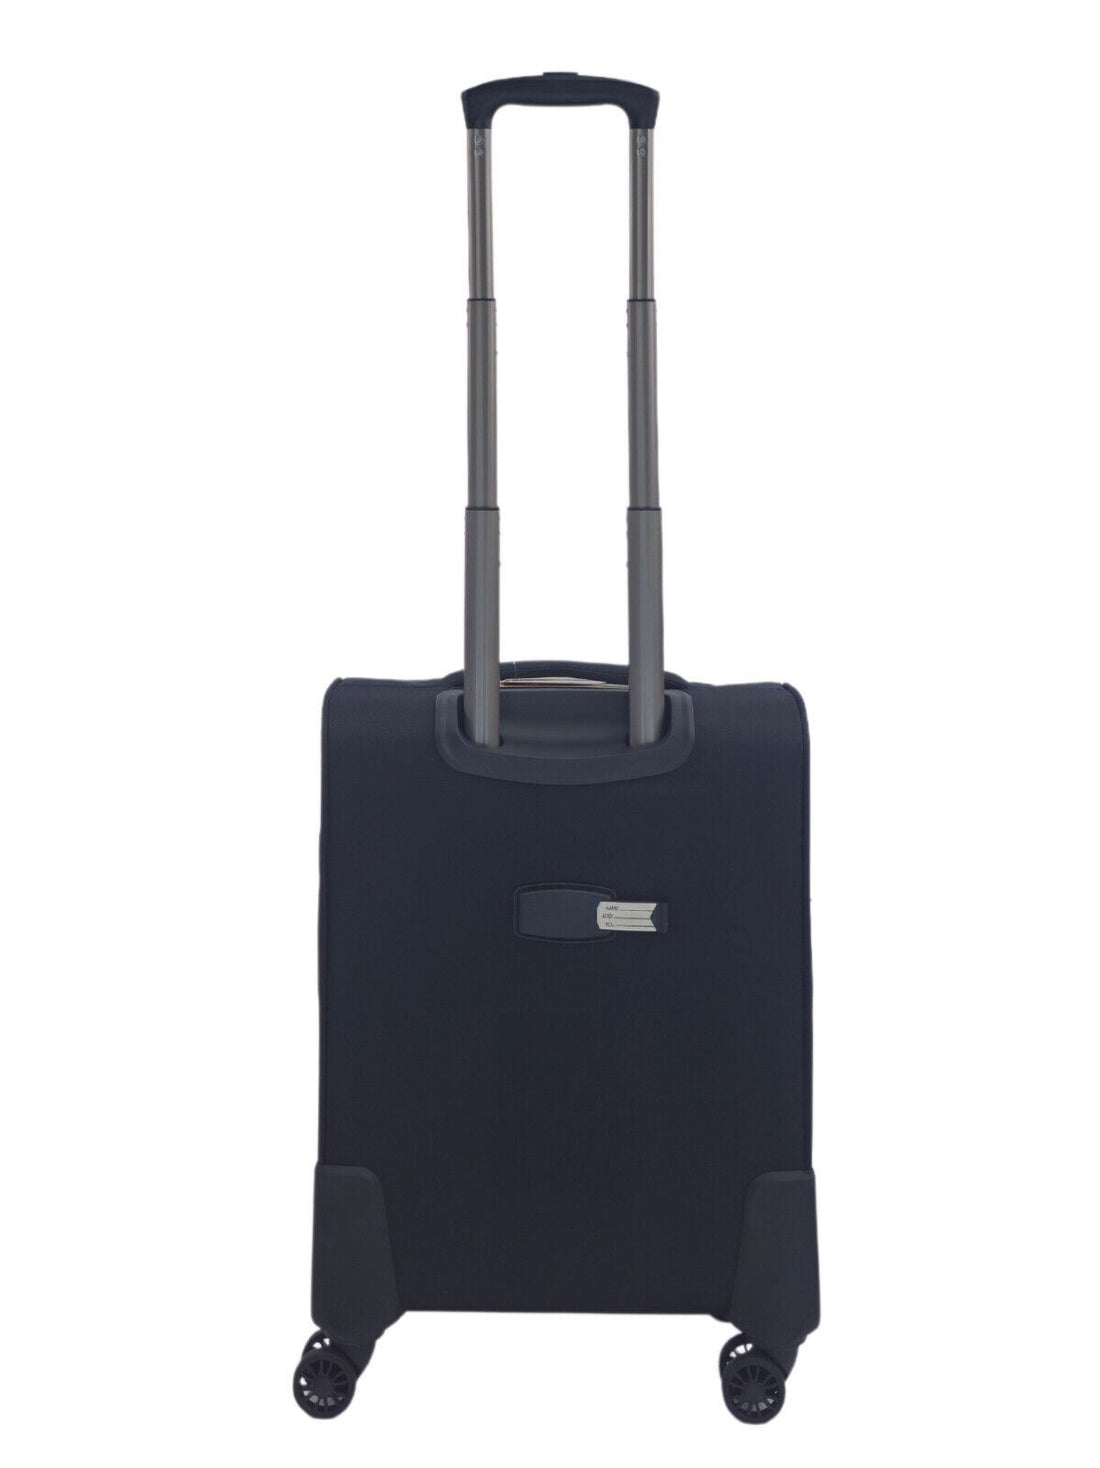 Ashford Cabin Soft Shell Suitcase in Black